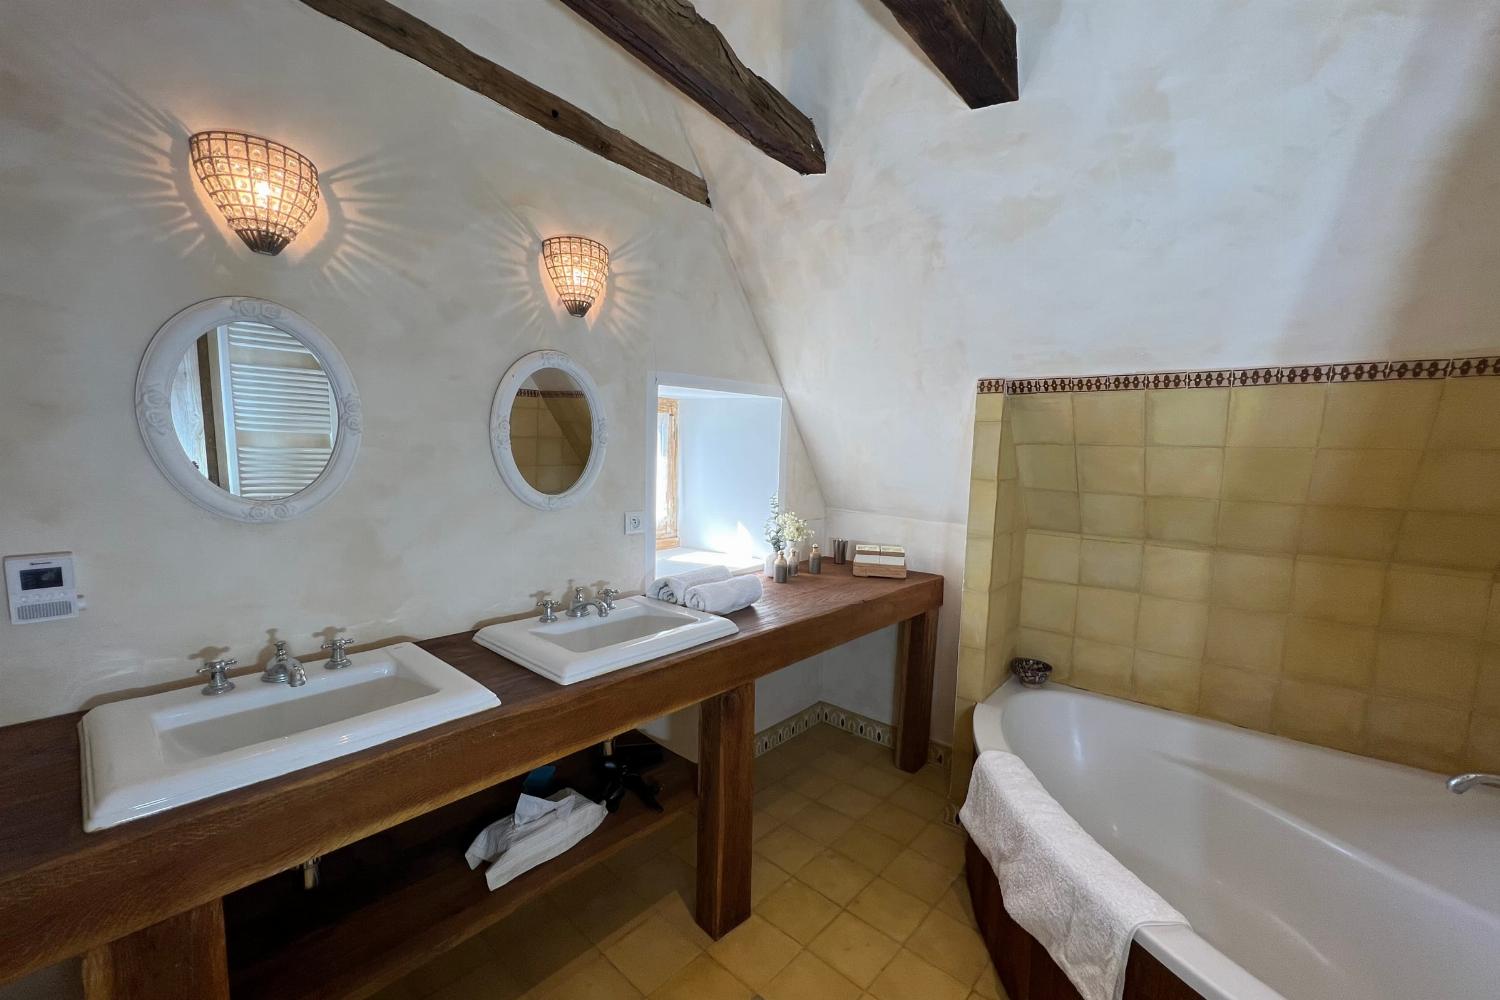 Salle de bain | Maison de vacances en Dordogne